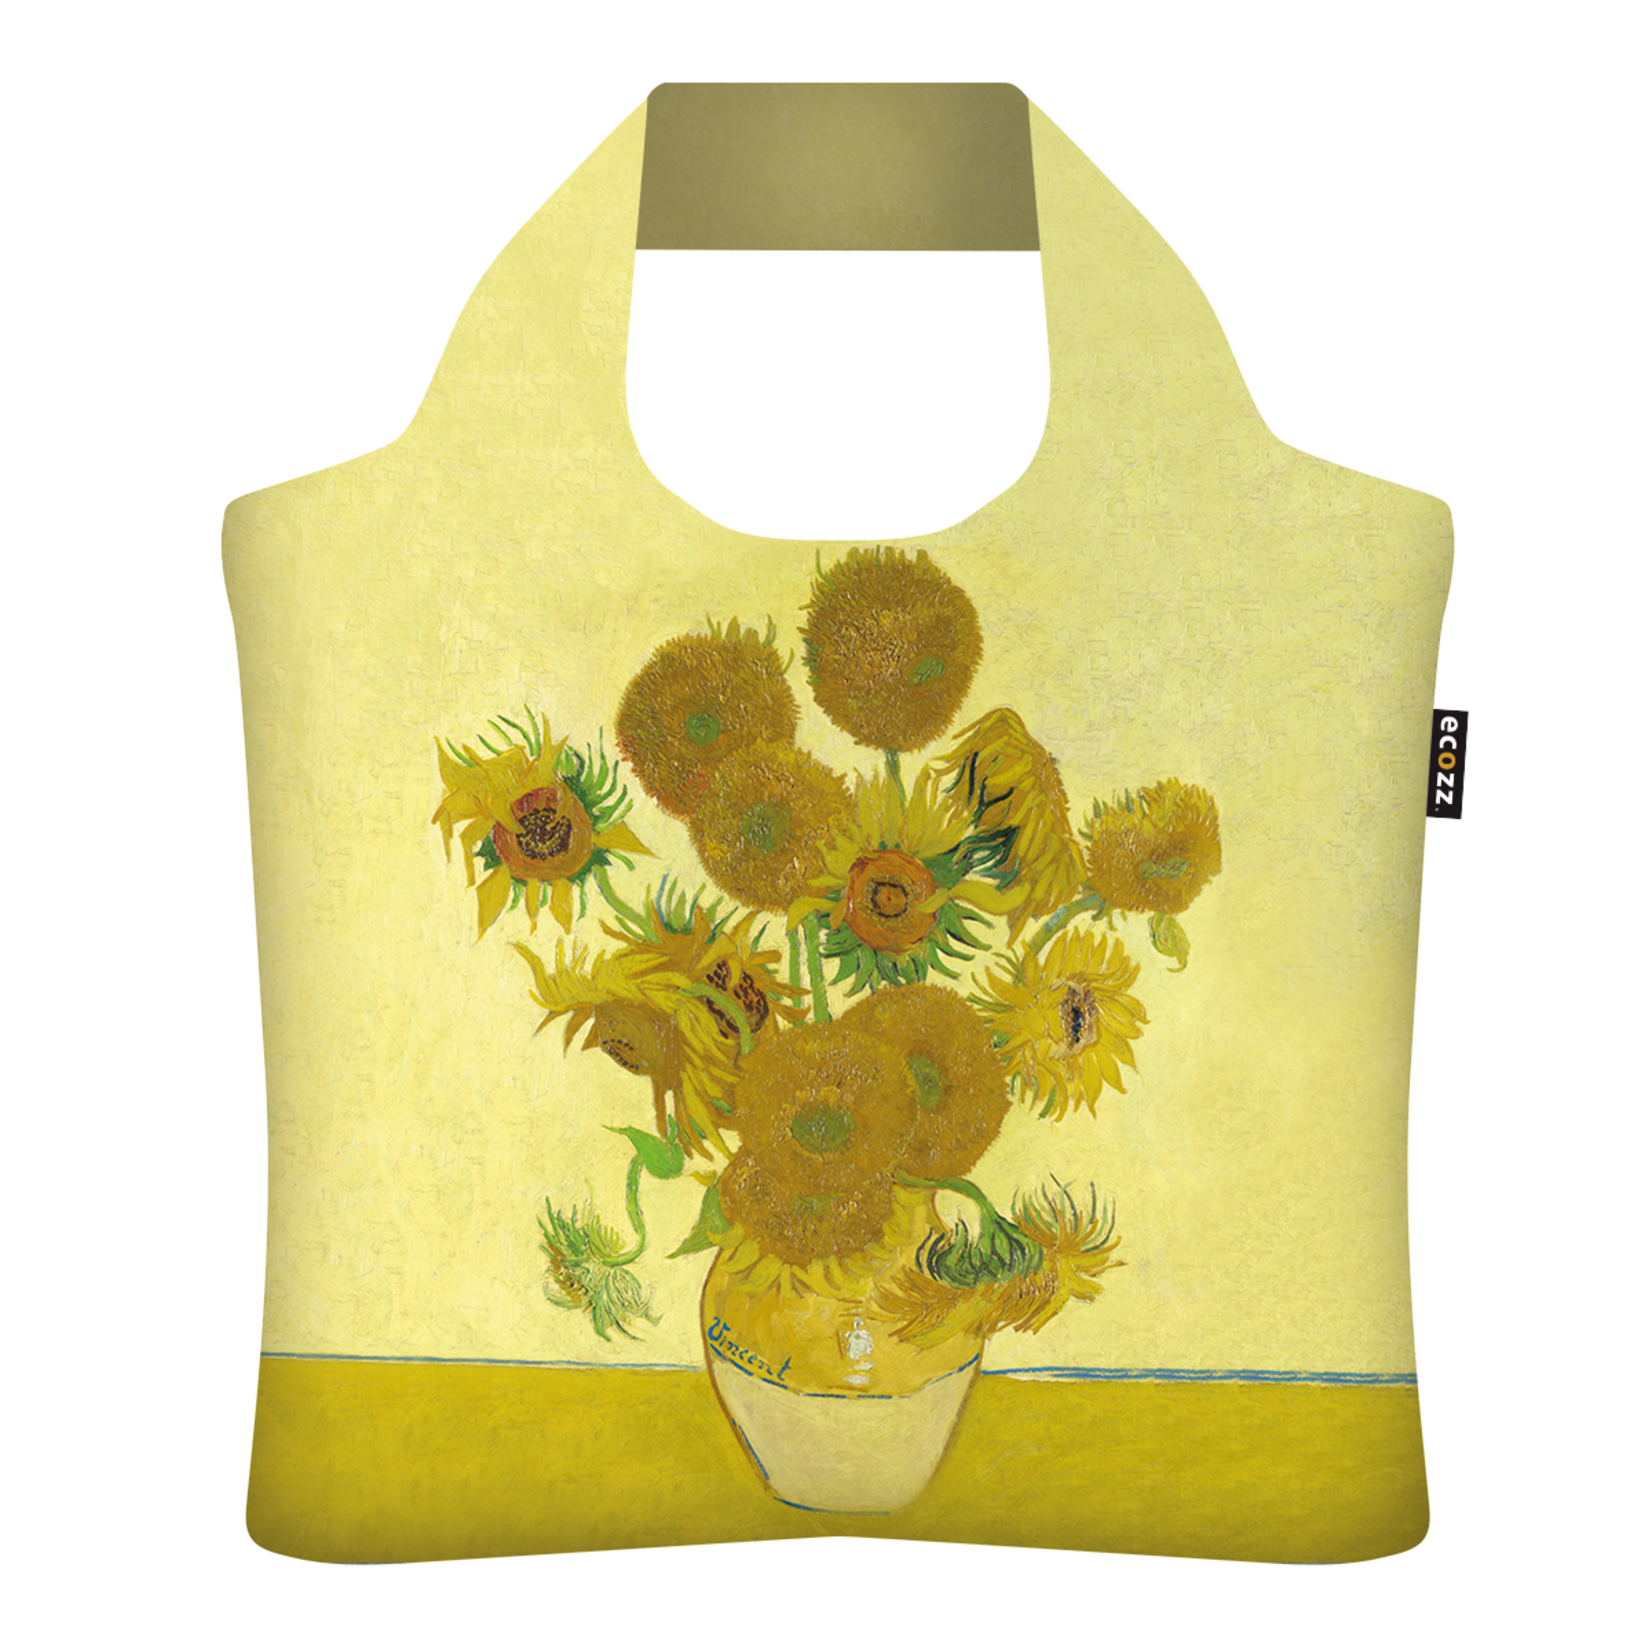 Ecozz Sunflowers - Vincent van Gogh 100% recycled PET